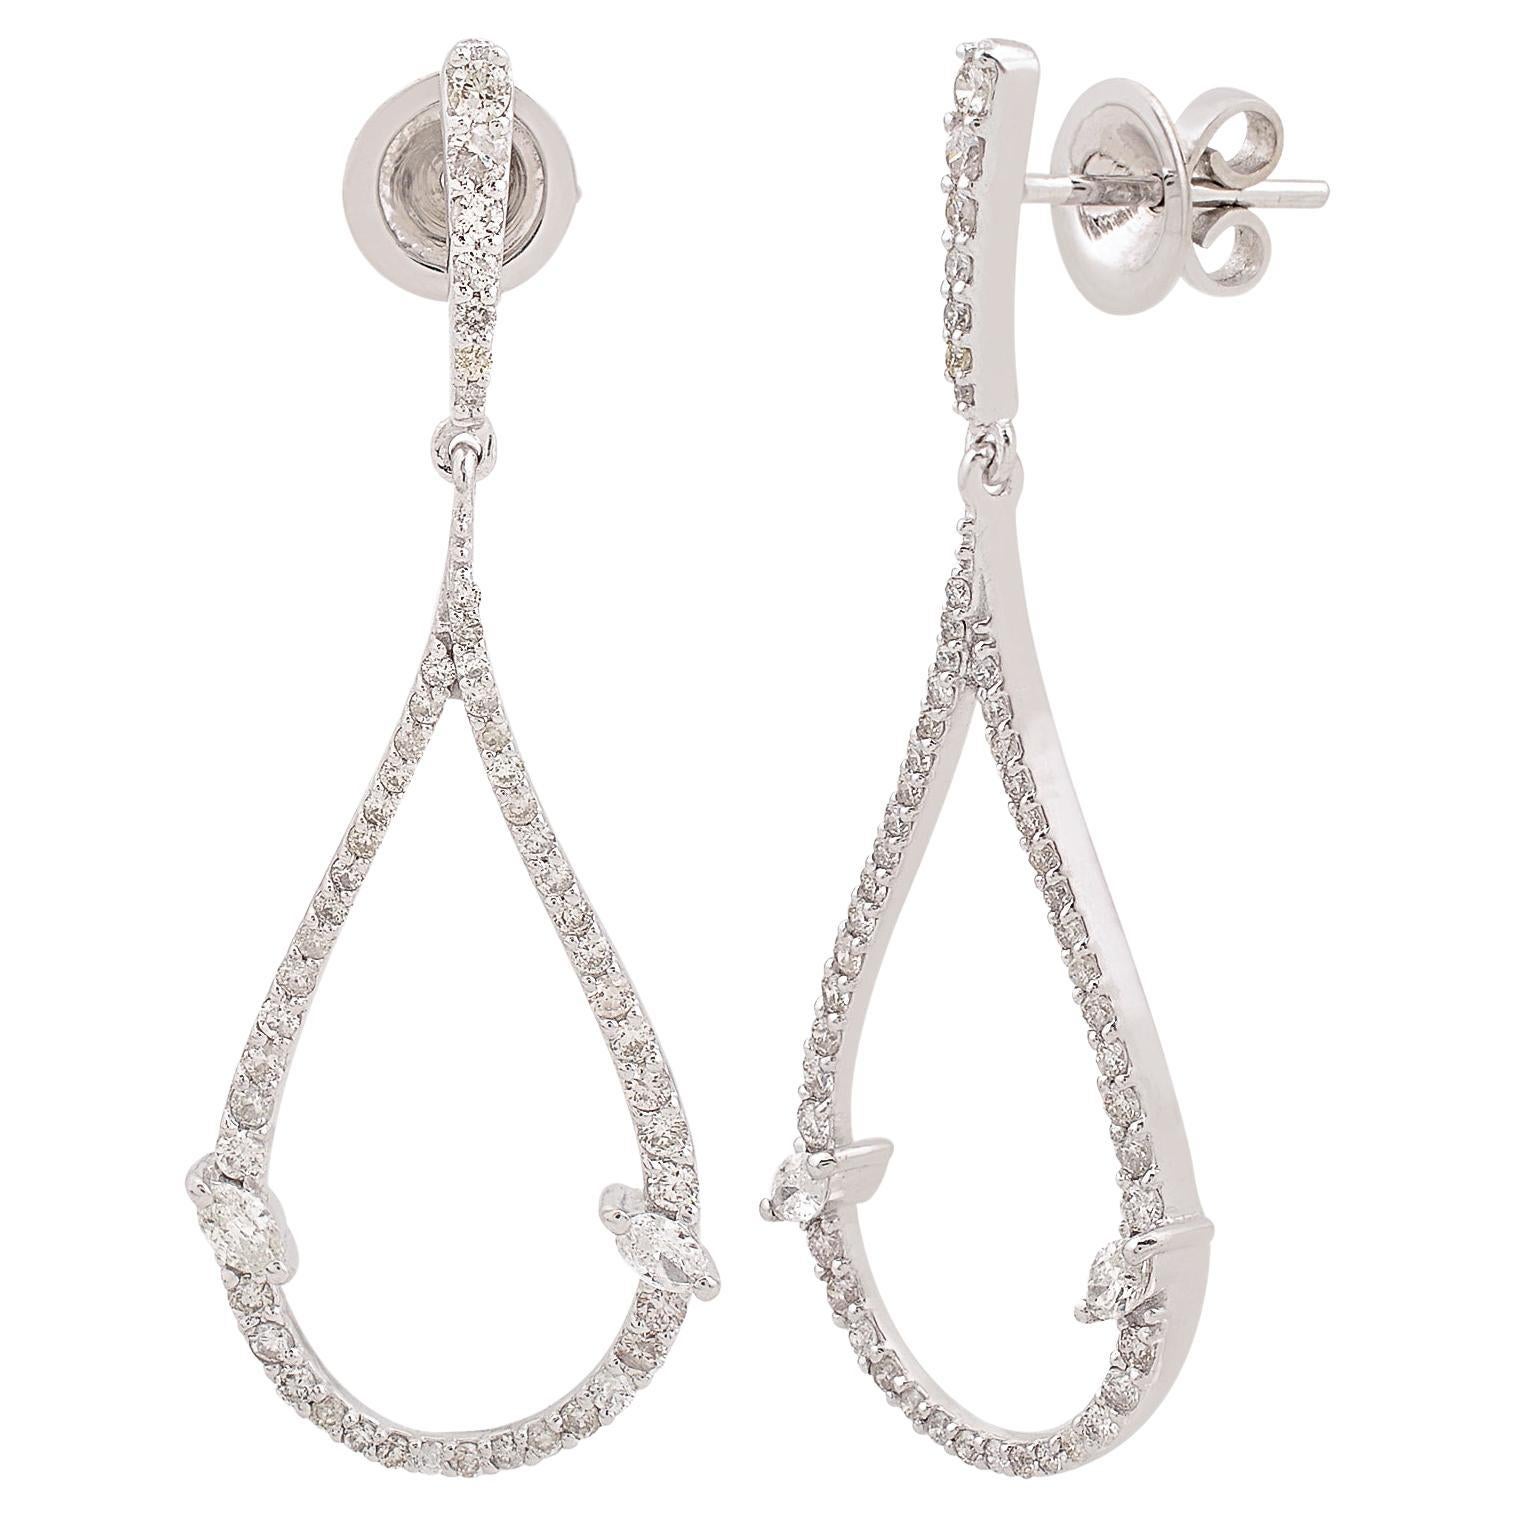 1.15 Carat SI Clarity HI Color Pear Diamond Drop Earrings 14k White Gold Jewelry